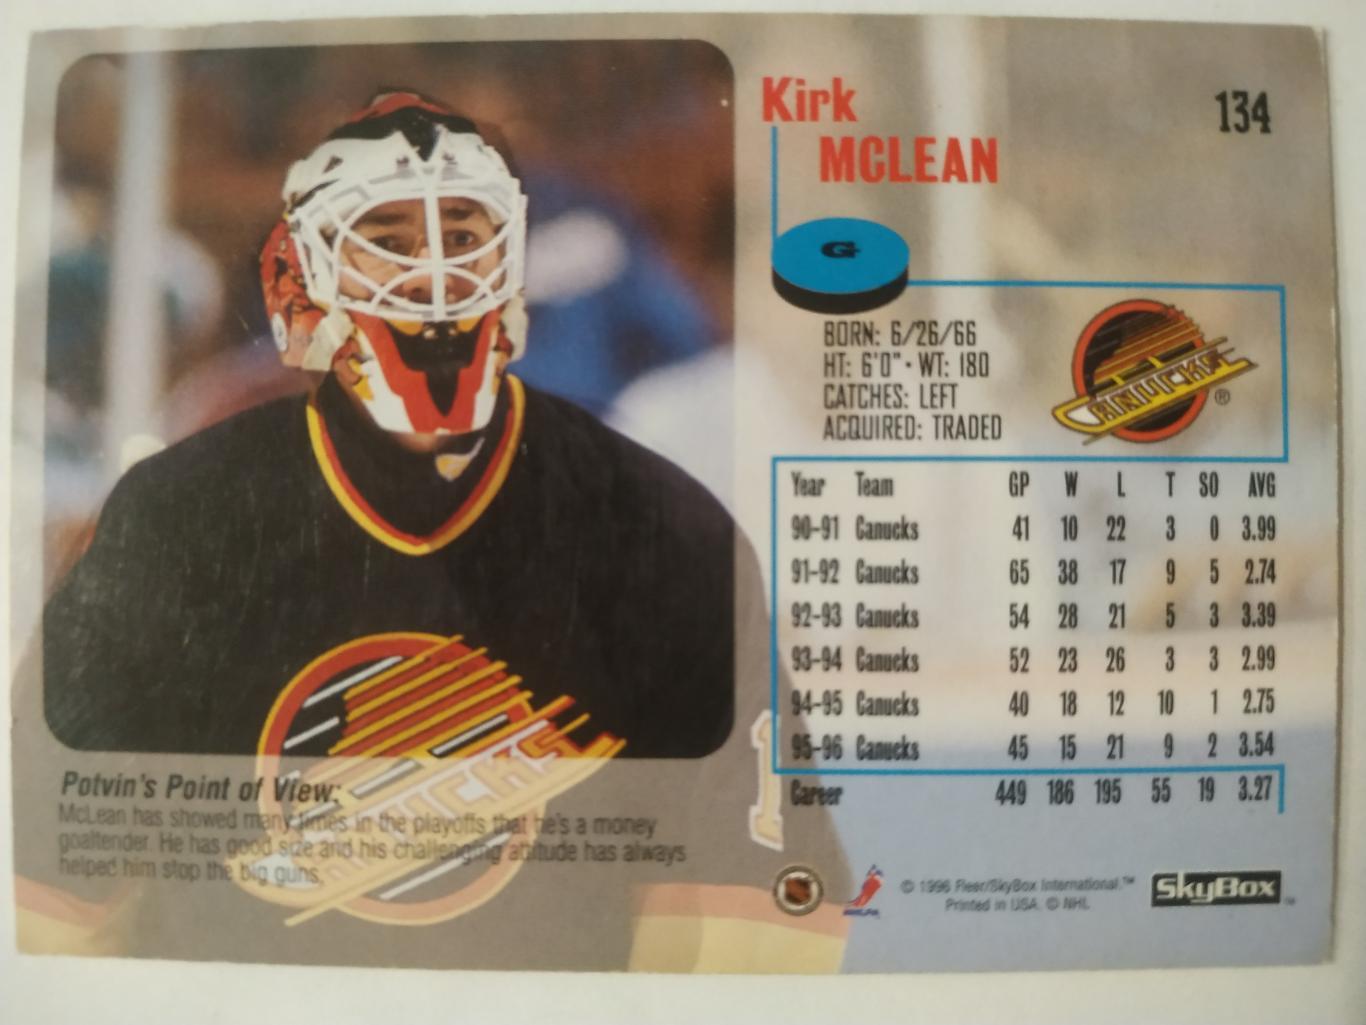 ХОККЕЙ КАРТОЧКА НХЛ IMPACT SKYBOX 1996-97 KIRK MCLEAN VANCOUVER CANUCKS #134 1